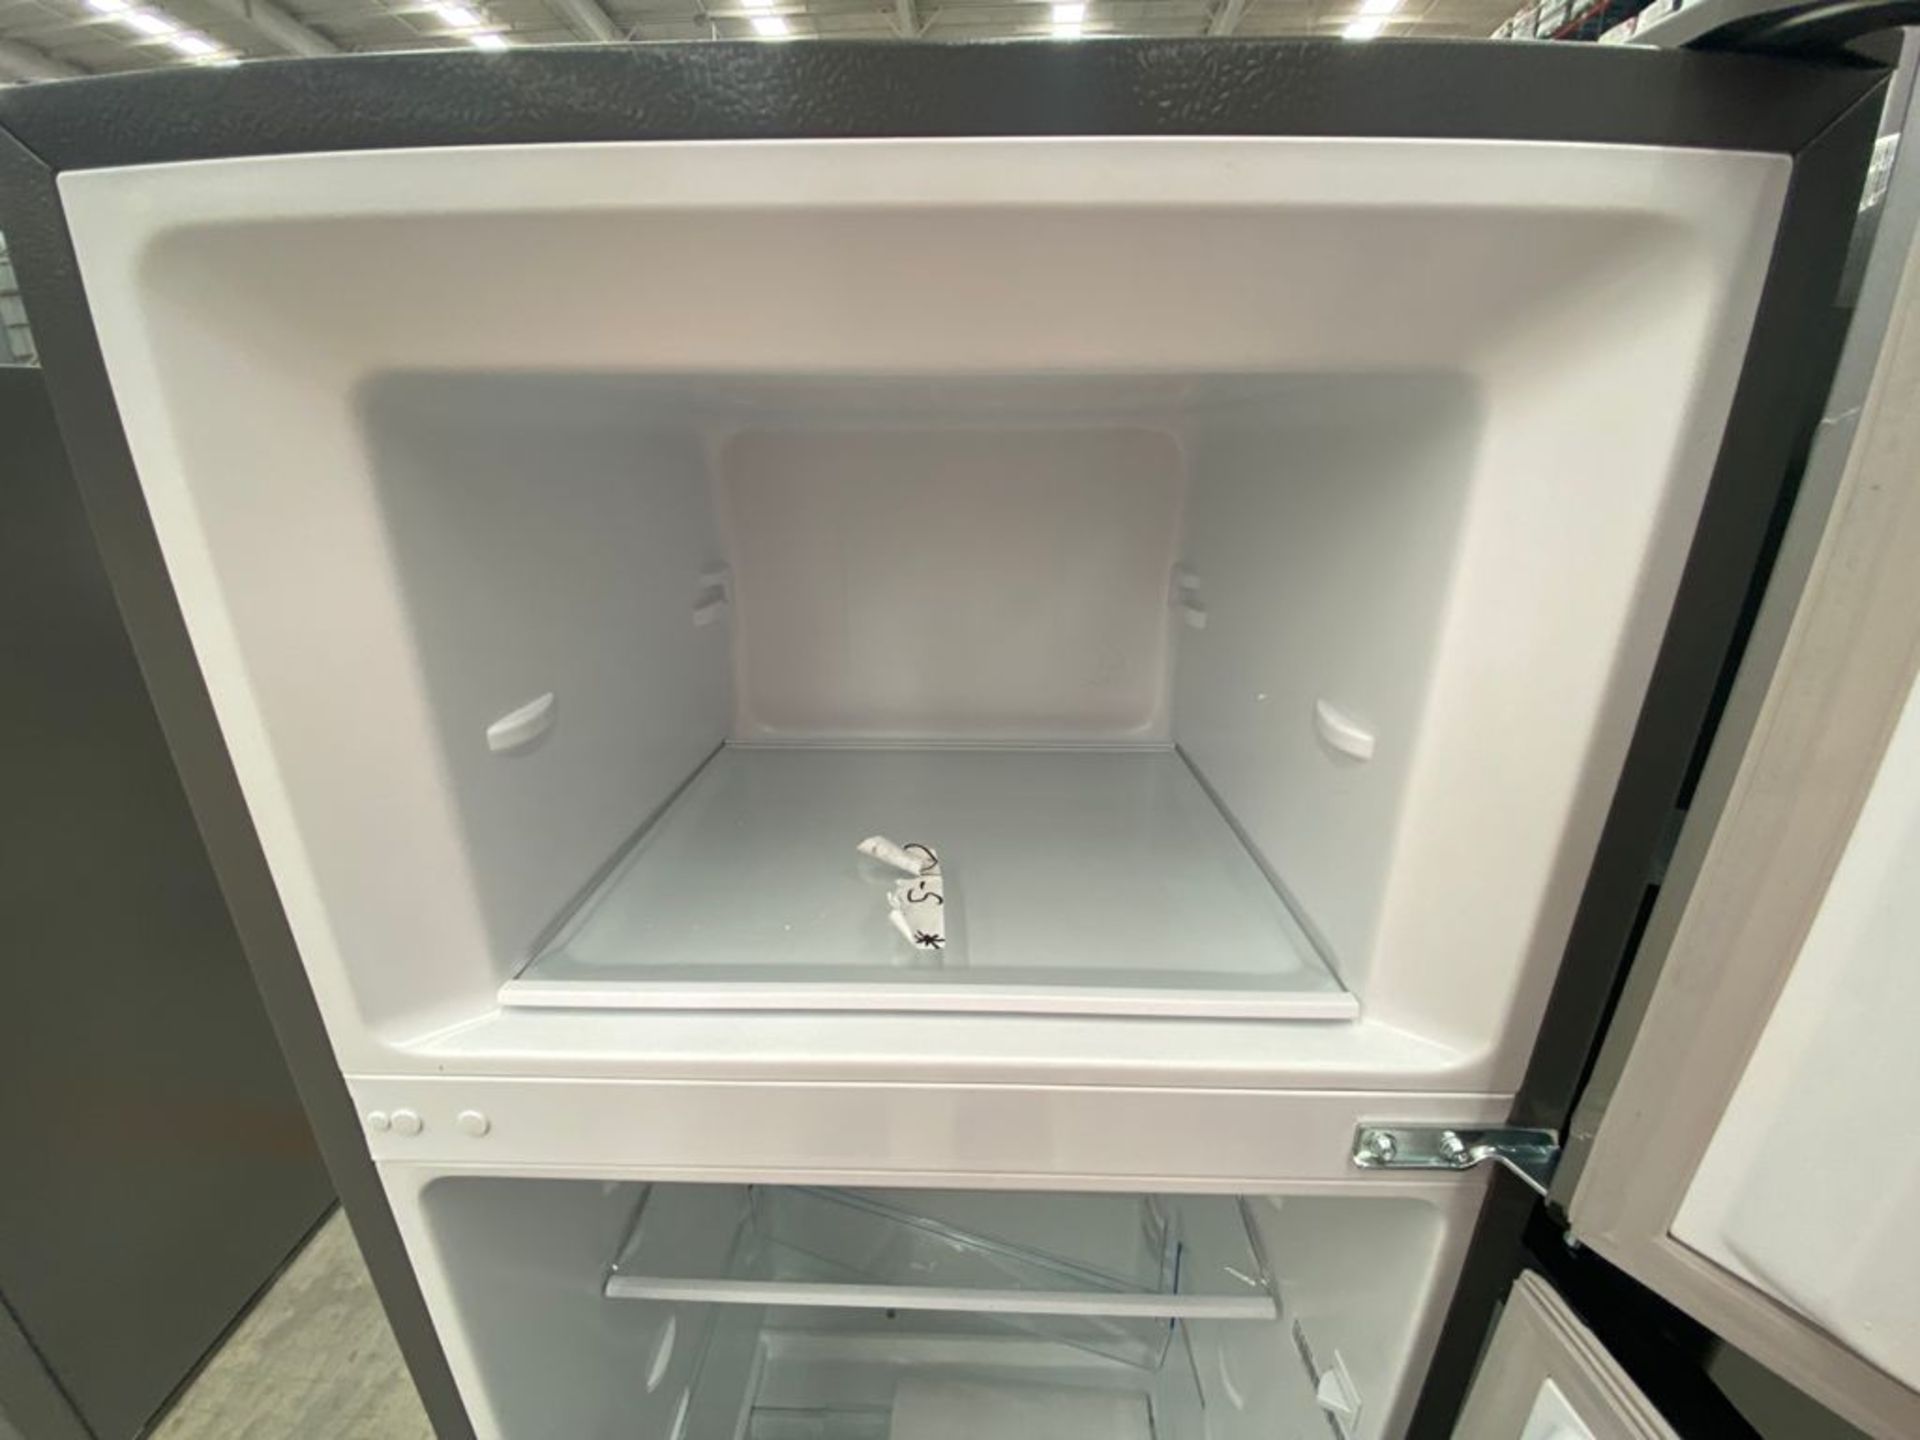 2 Refrigeradores marca Hisense color gris modelo RT80D6AWX - Image 16 of 28